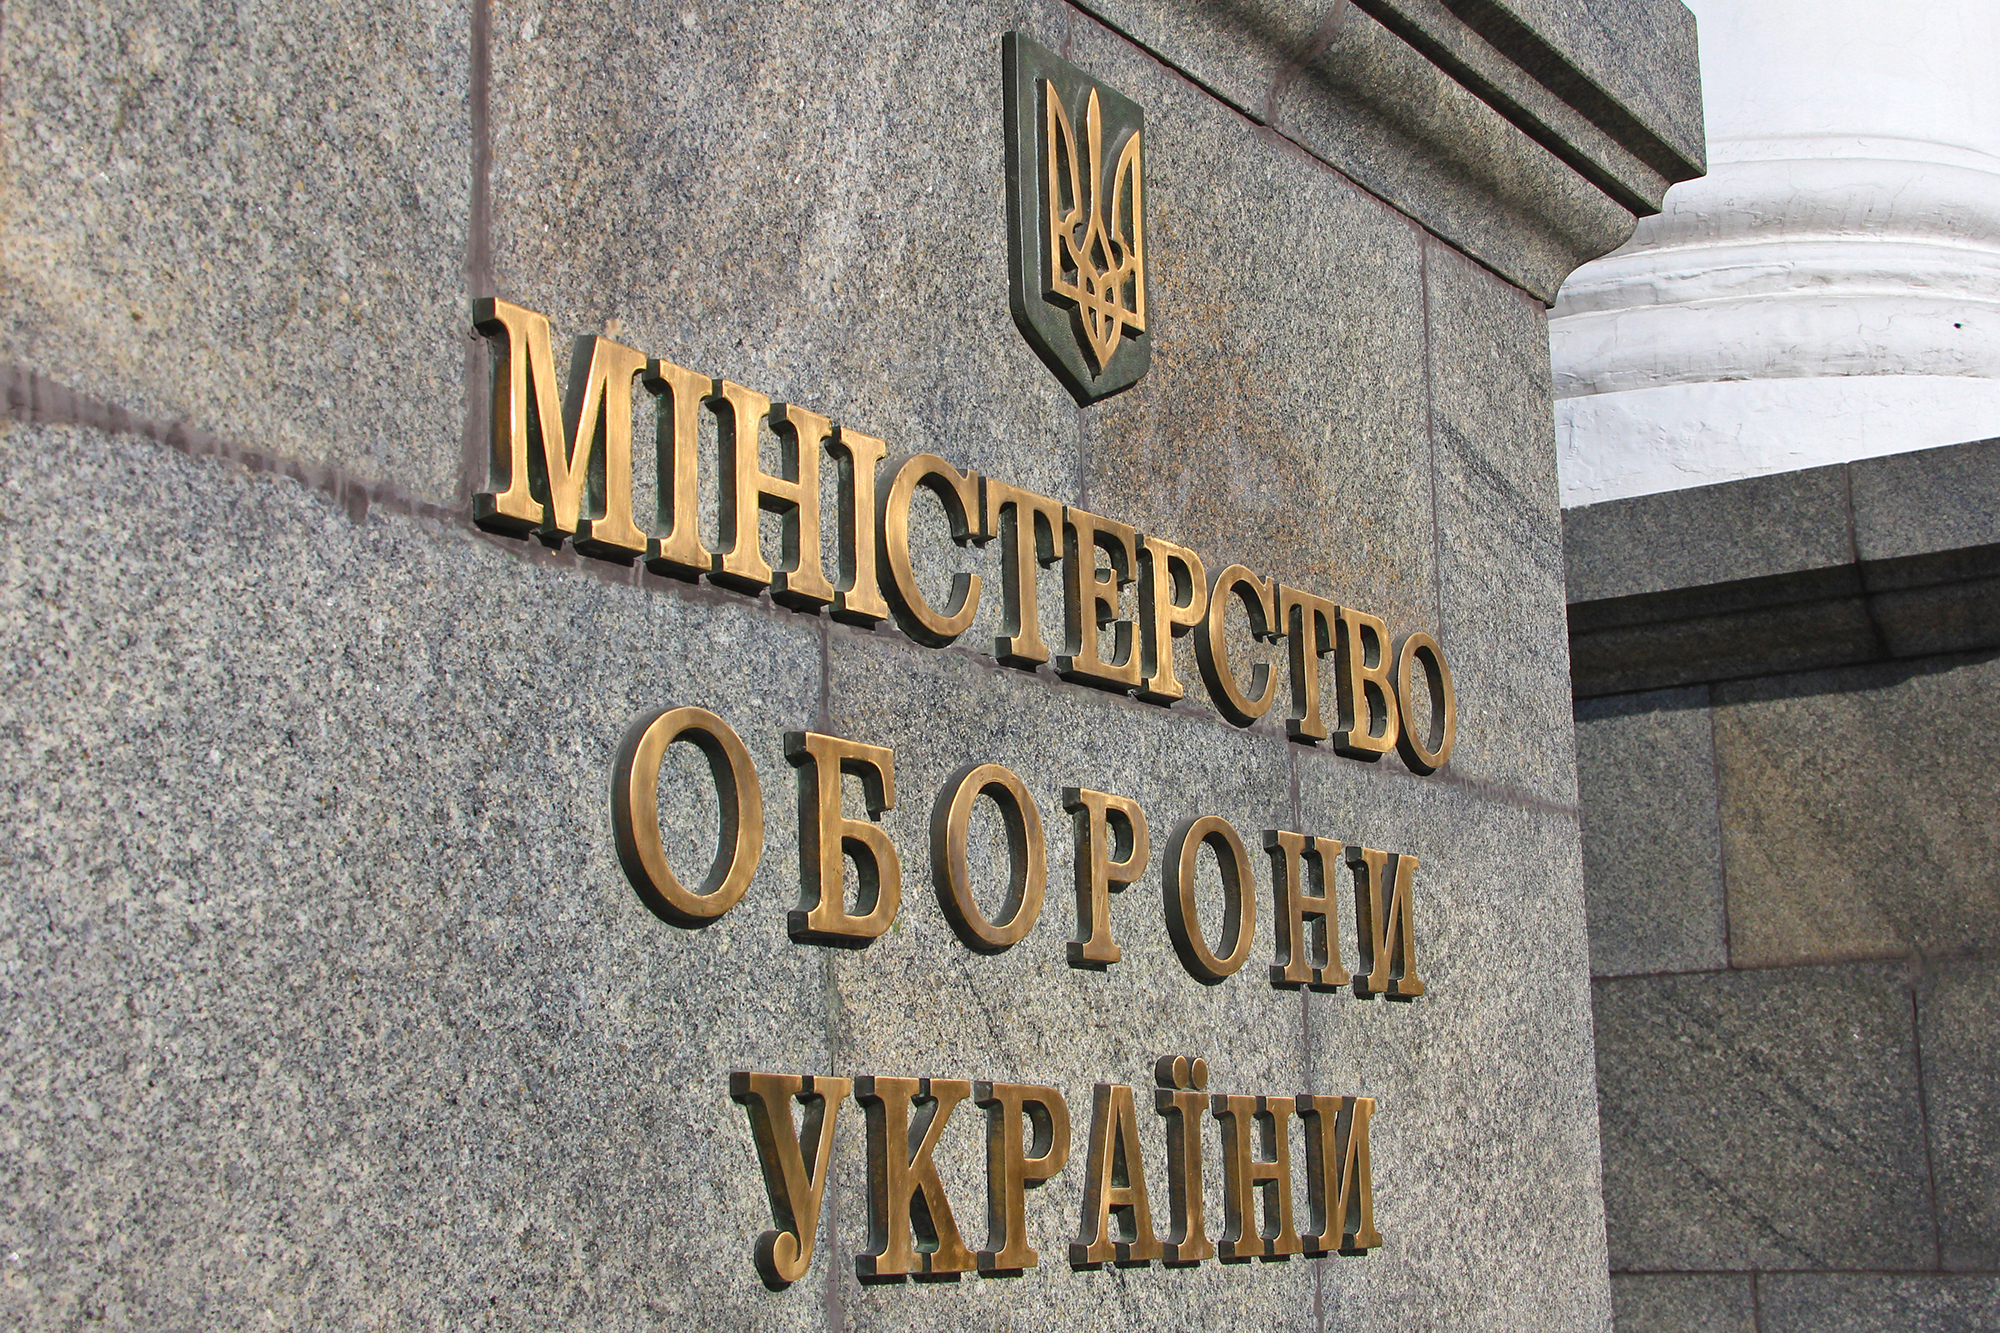 Міністерство оборони України